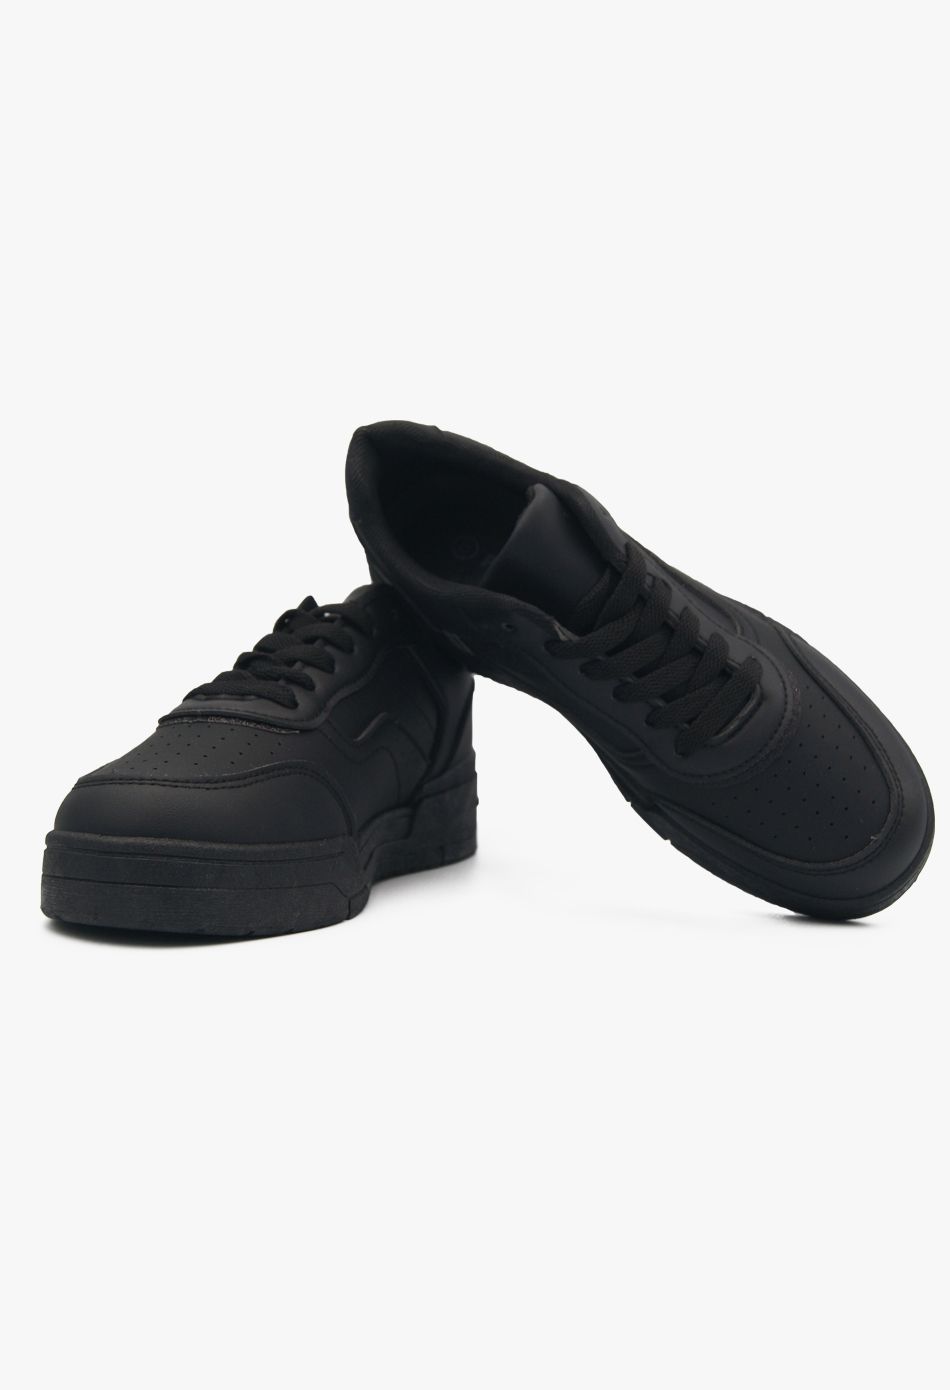 Sneakers Δίσολα Μαύρο / LY586-black Γυναικεία Αθλητικά και Sneakers joya.gr